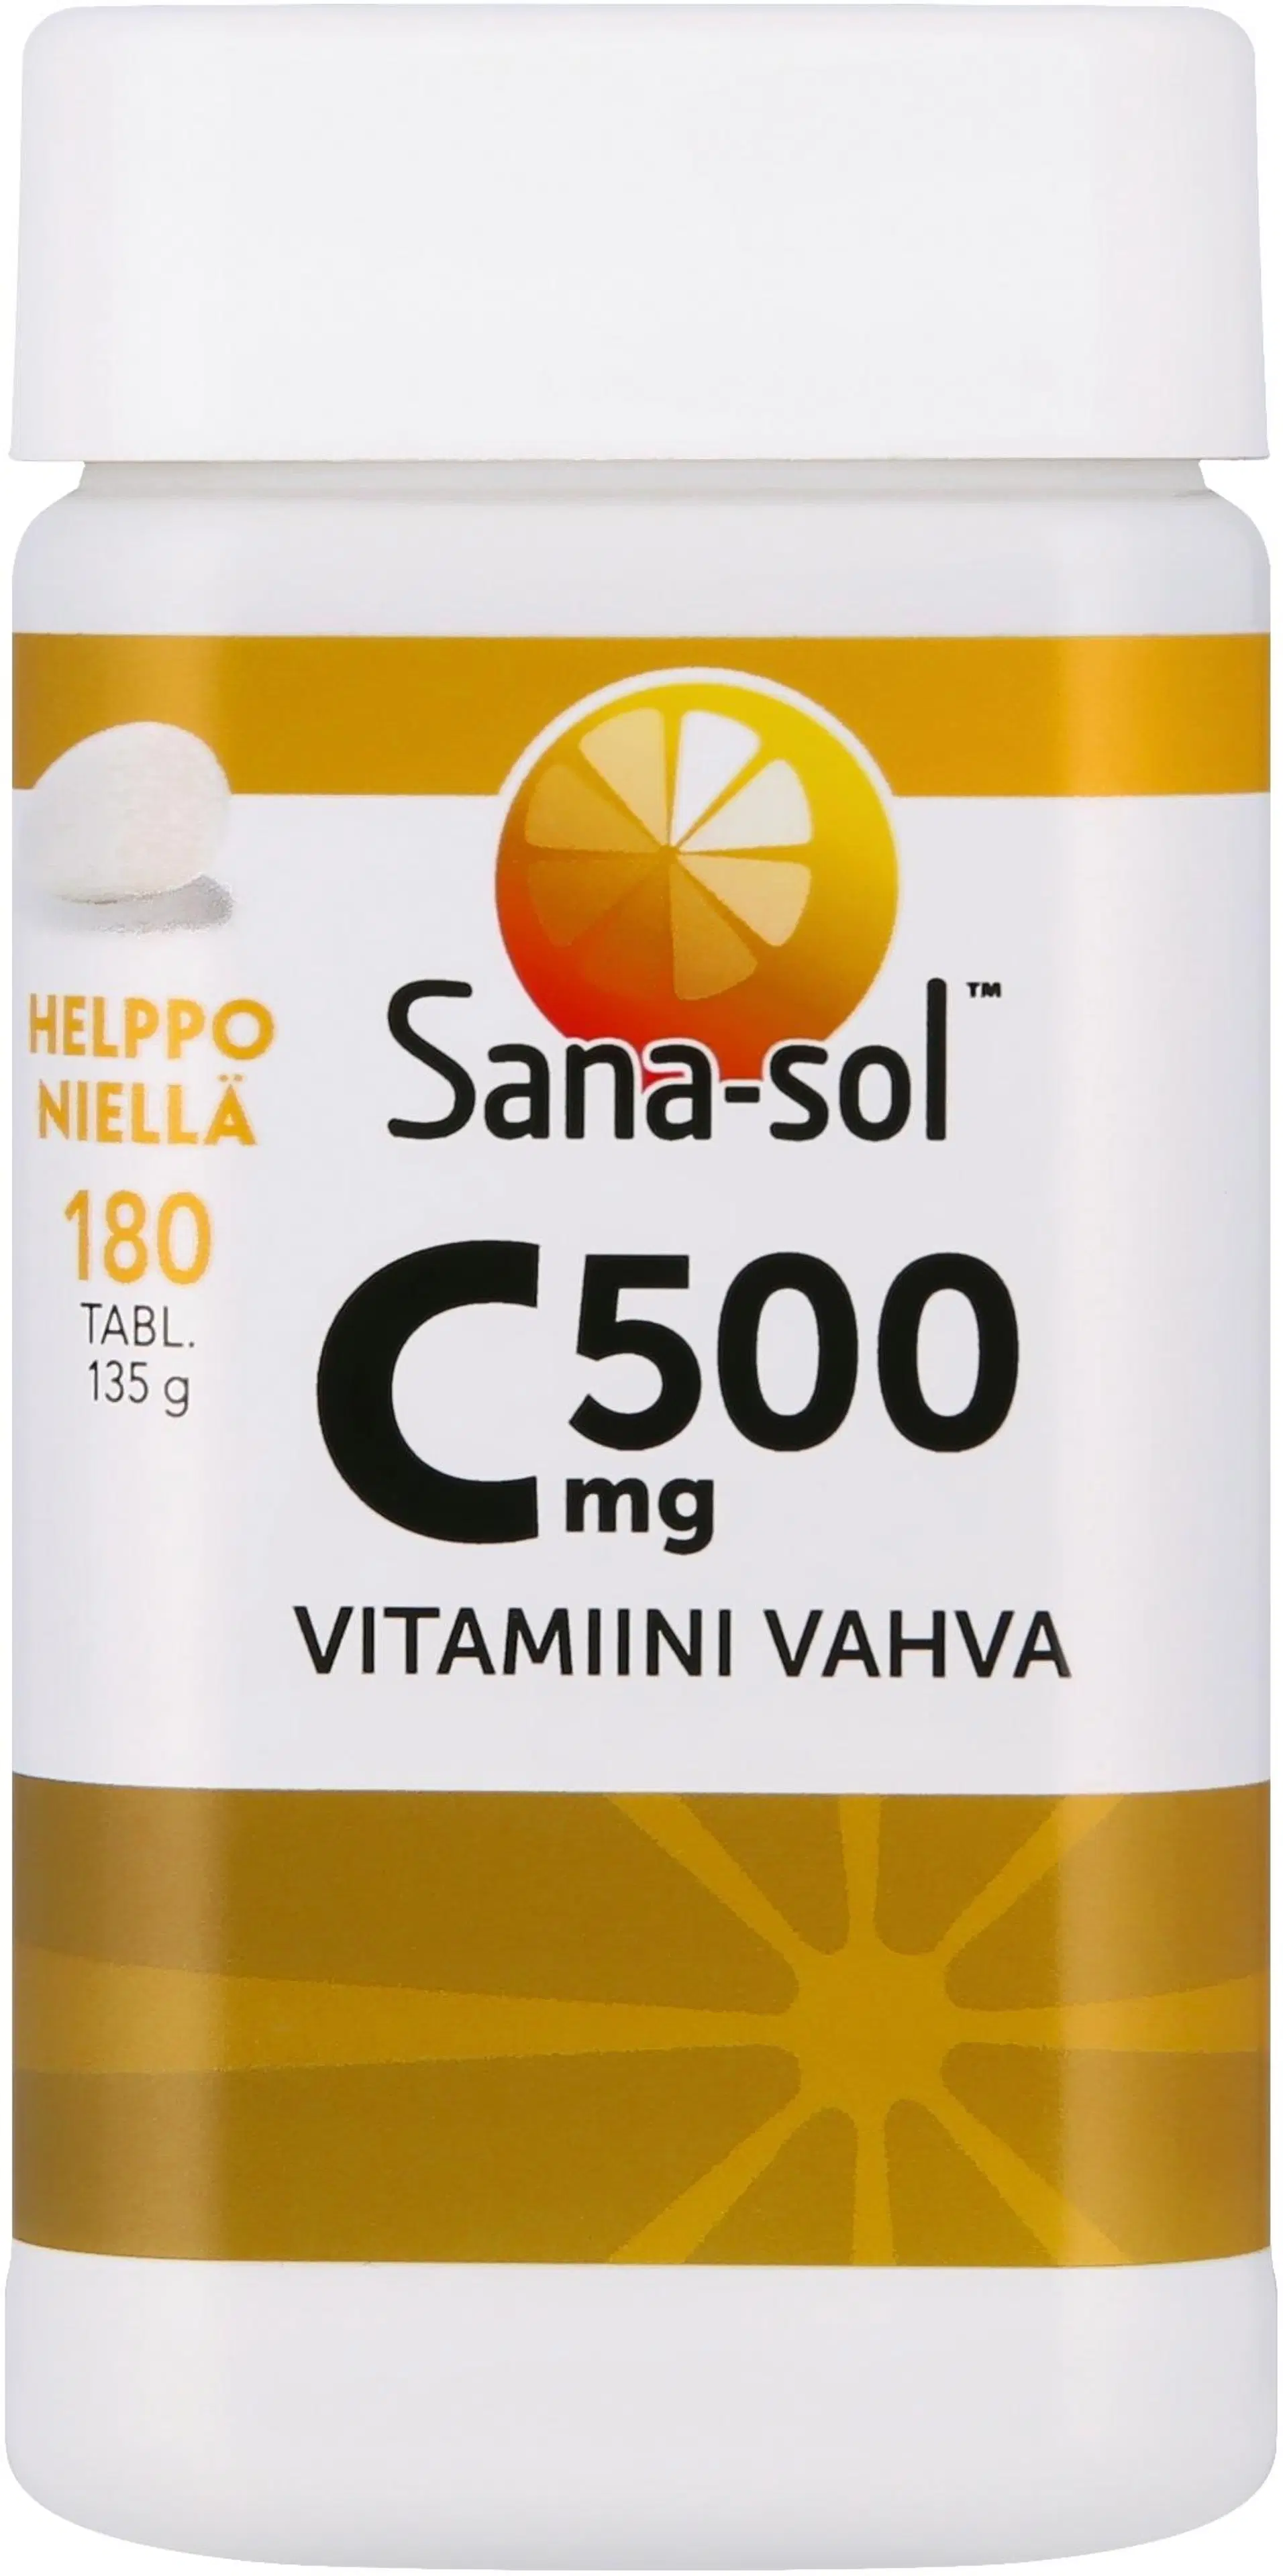 Sana-sol C-vitamiini 500mg tabletti ravintolisä 180tabl